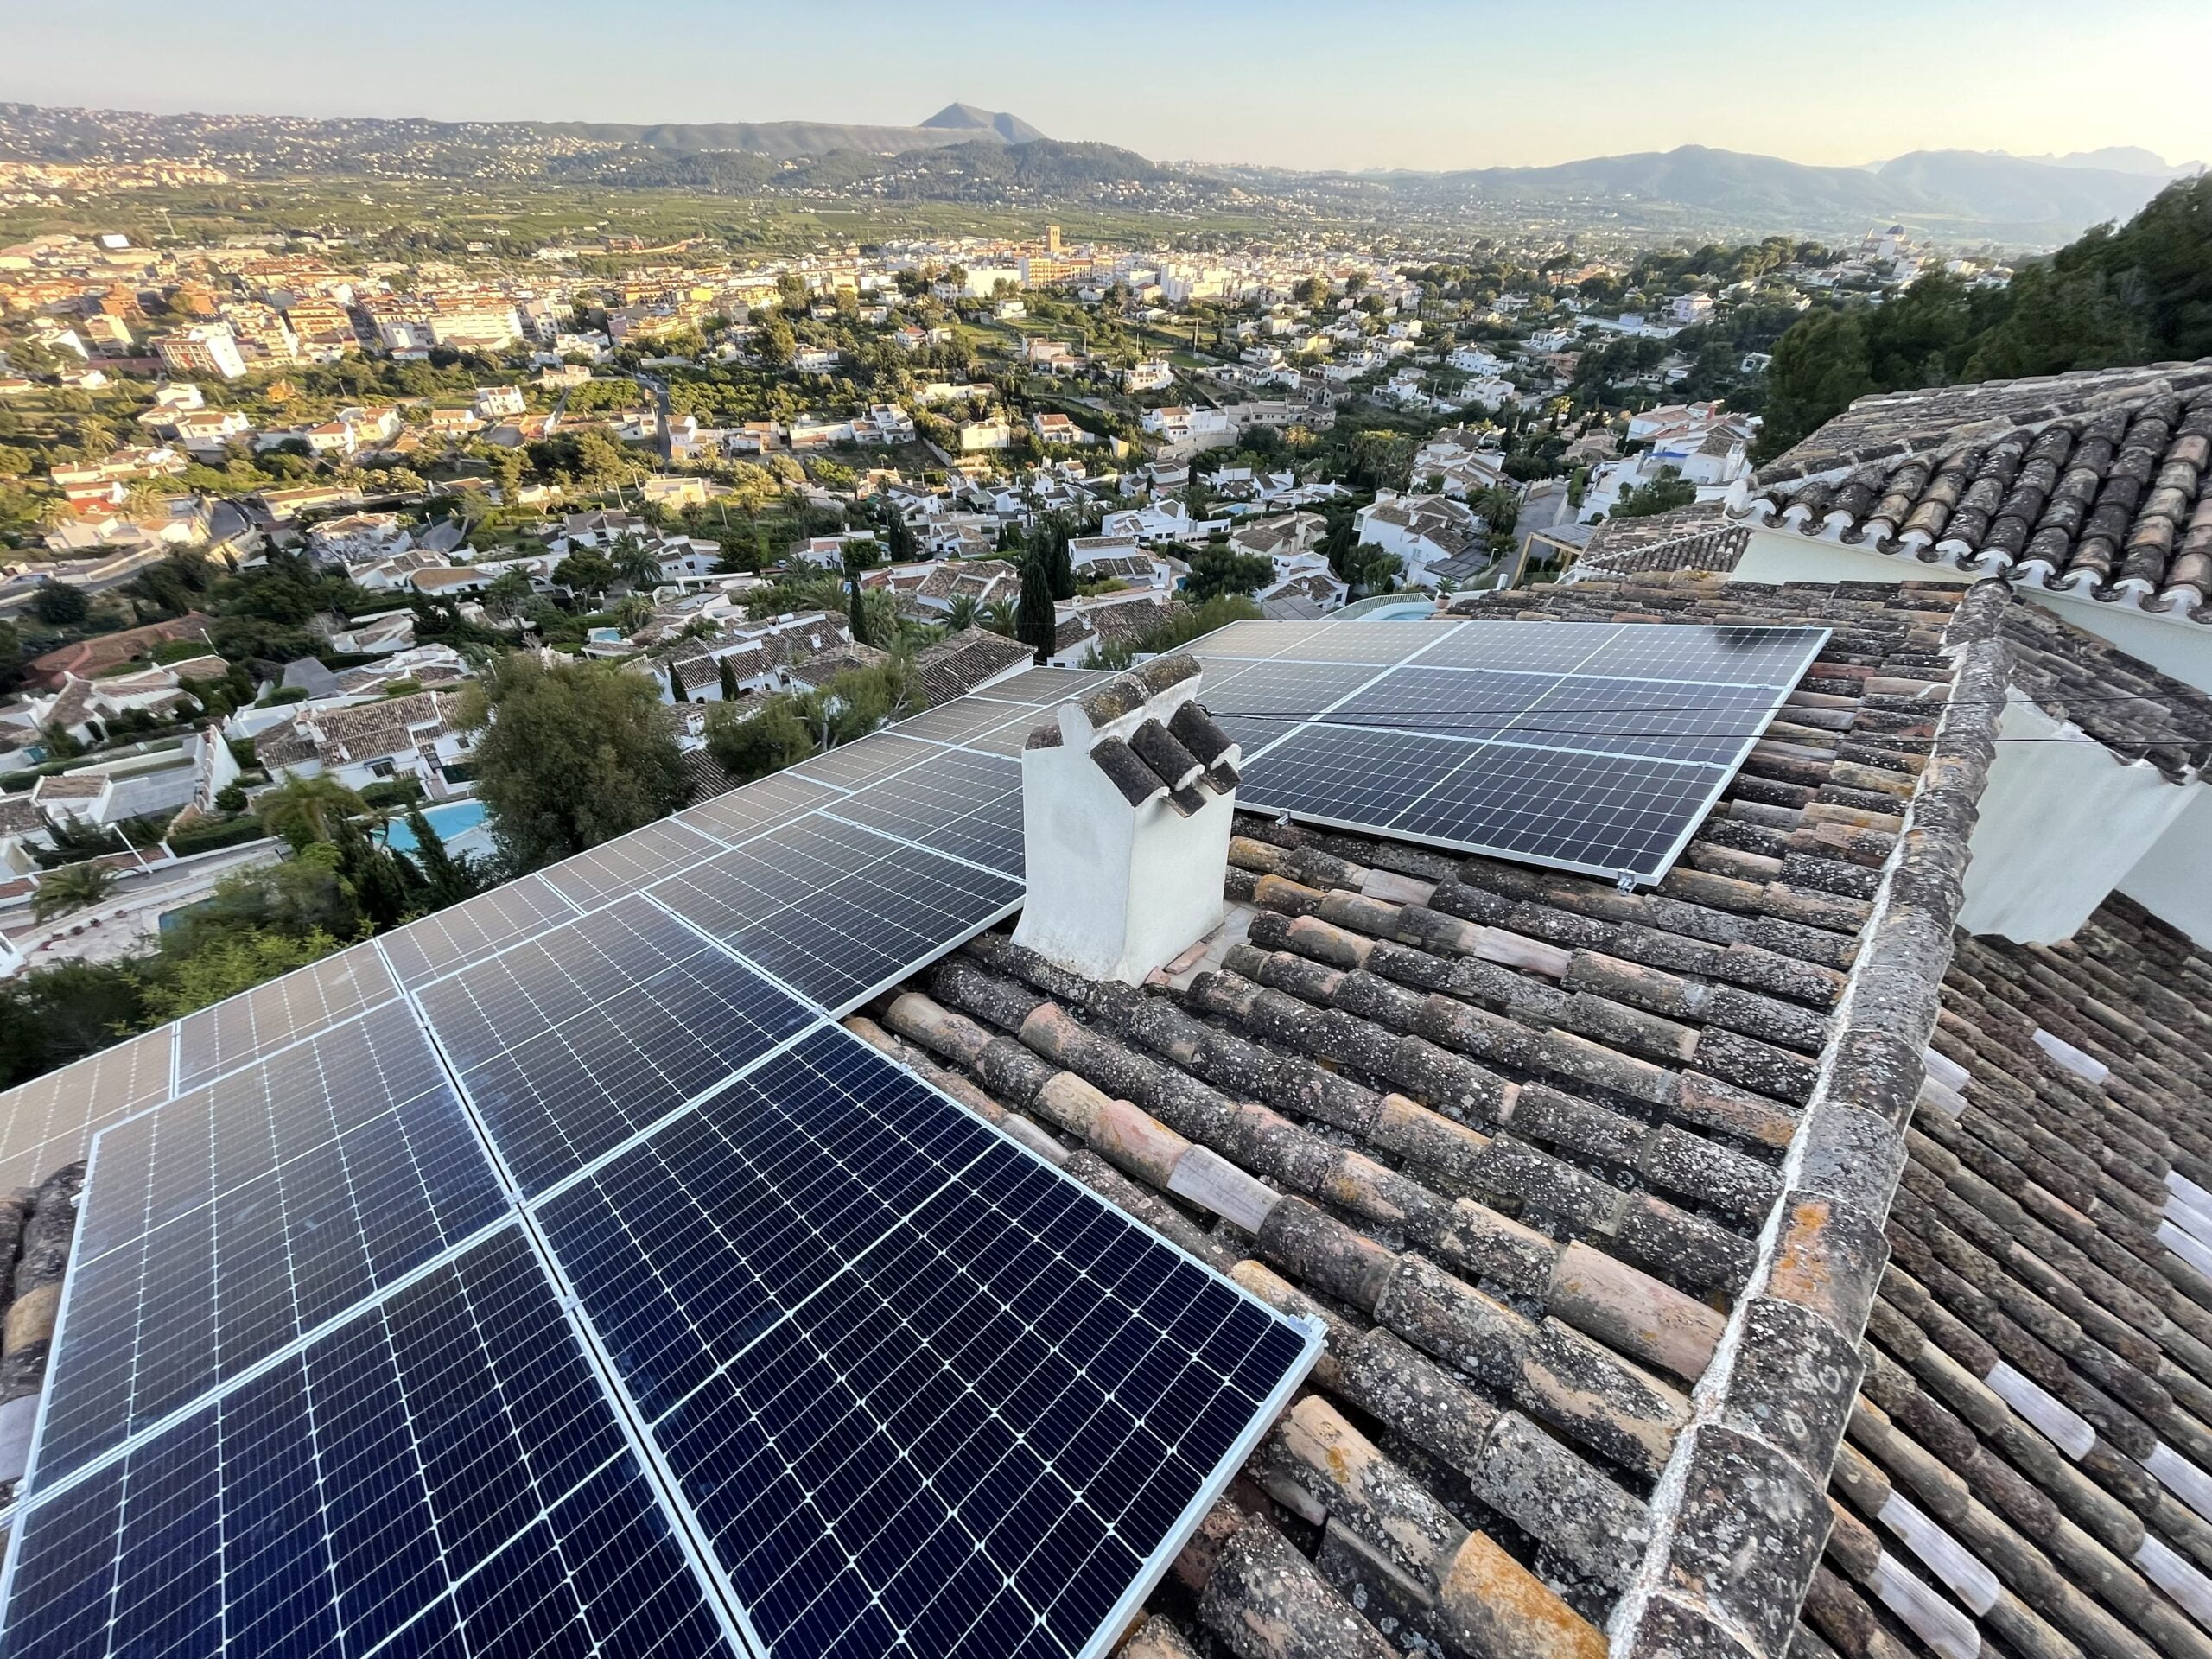 25X 460 wp Solar Panels, Javea, Alicante (Hybrid system)